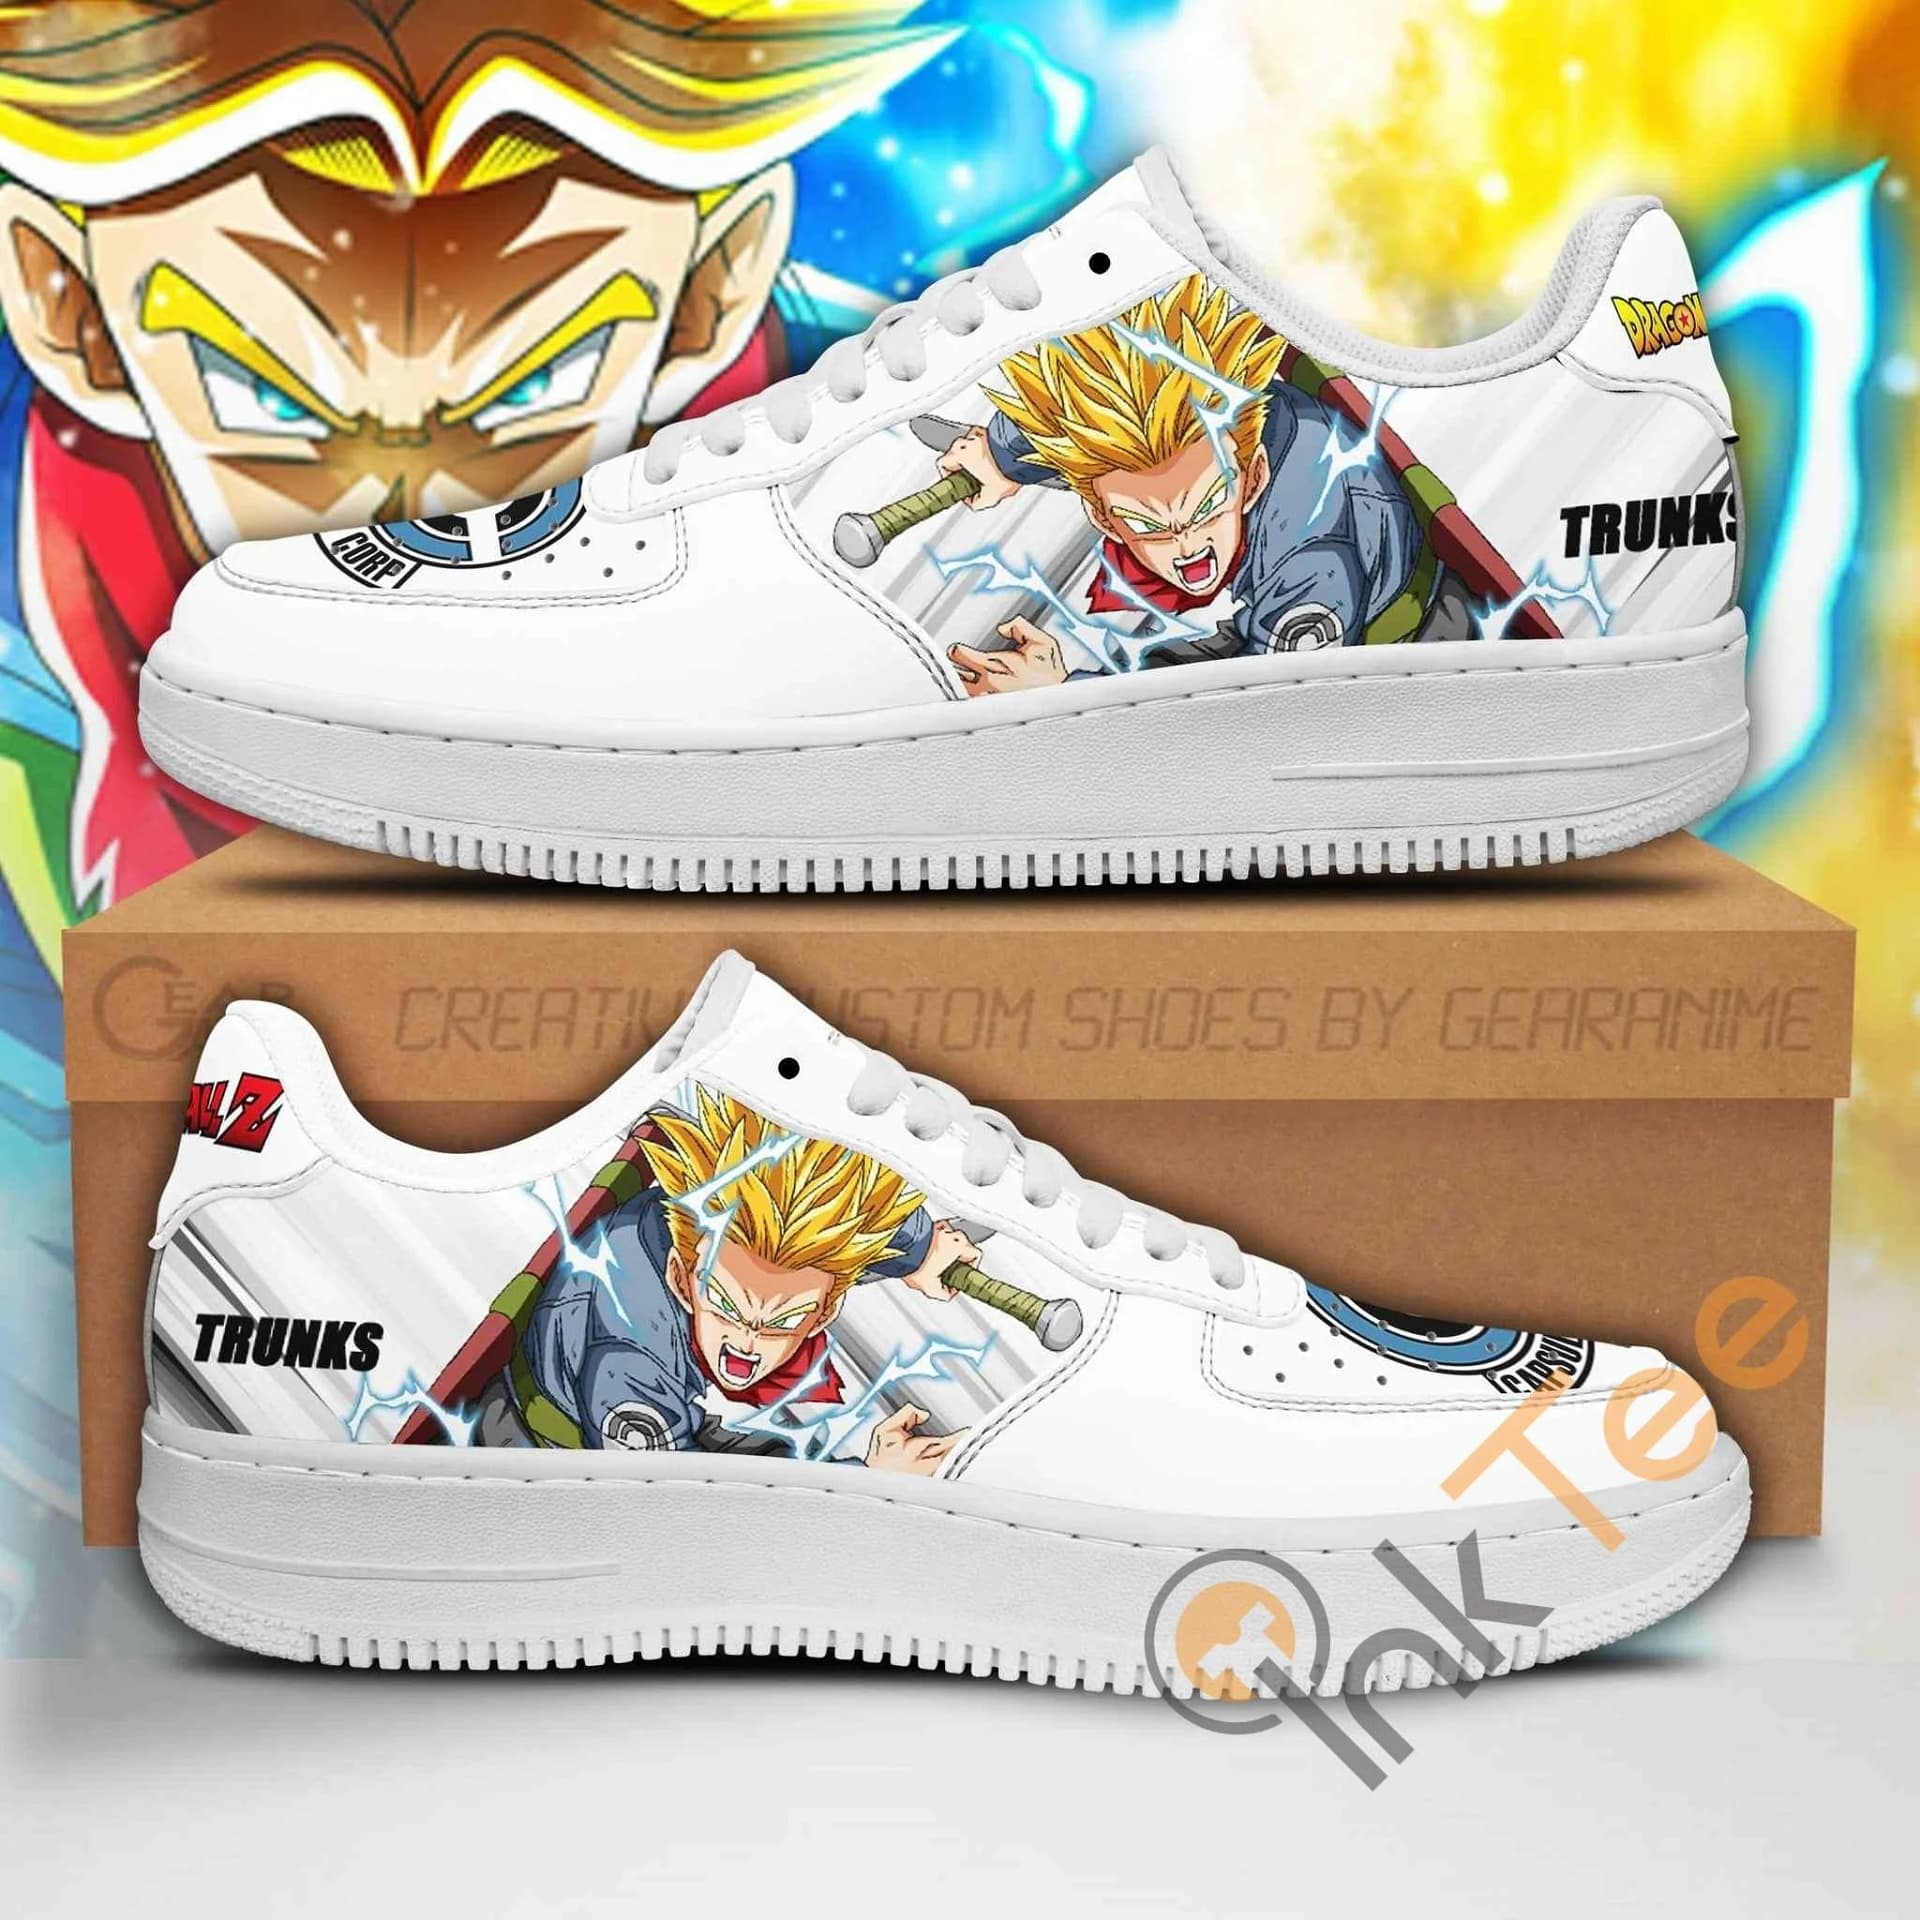 Dragon Ball Vegeta custom air Jordan 13 shoes -LIMITED EDITION